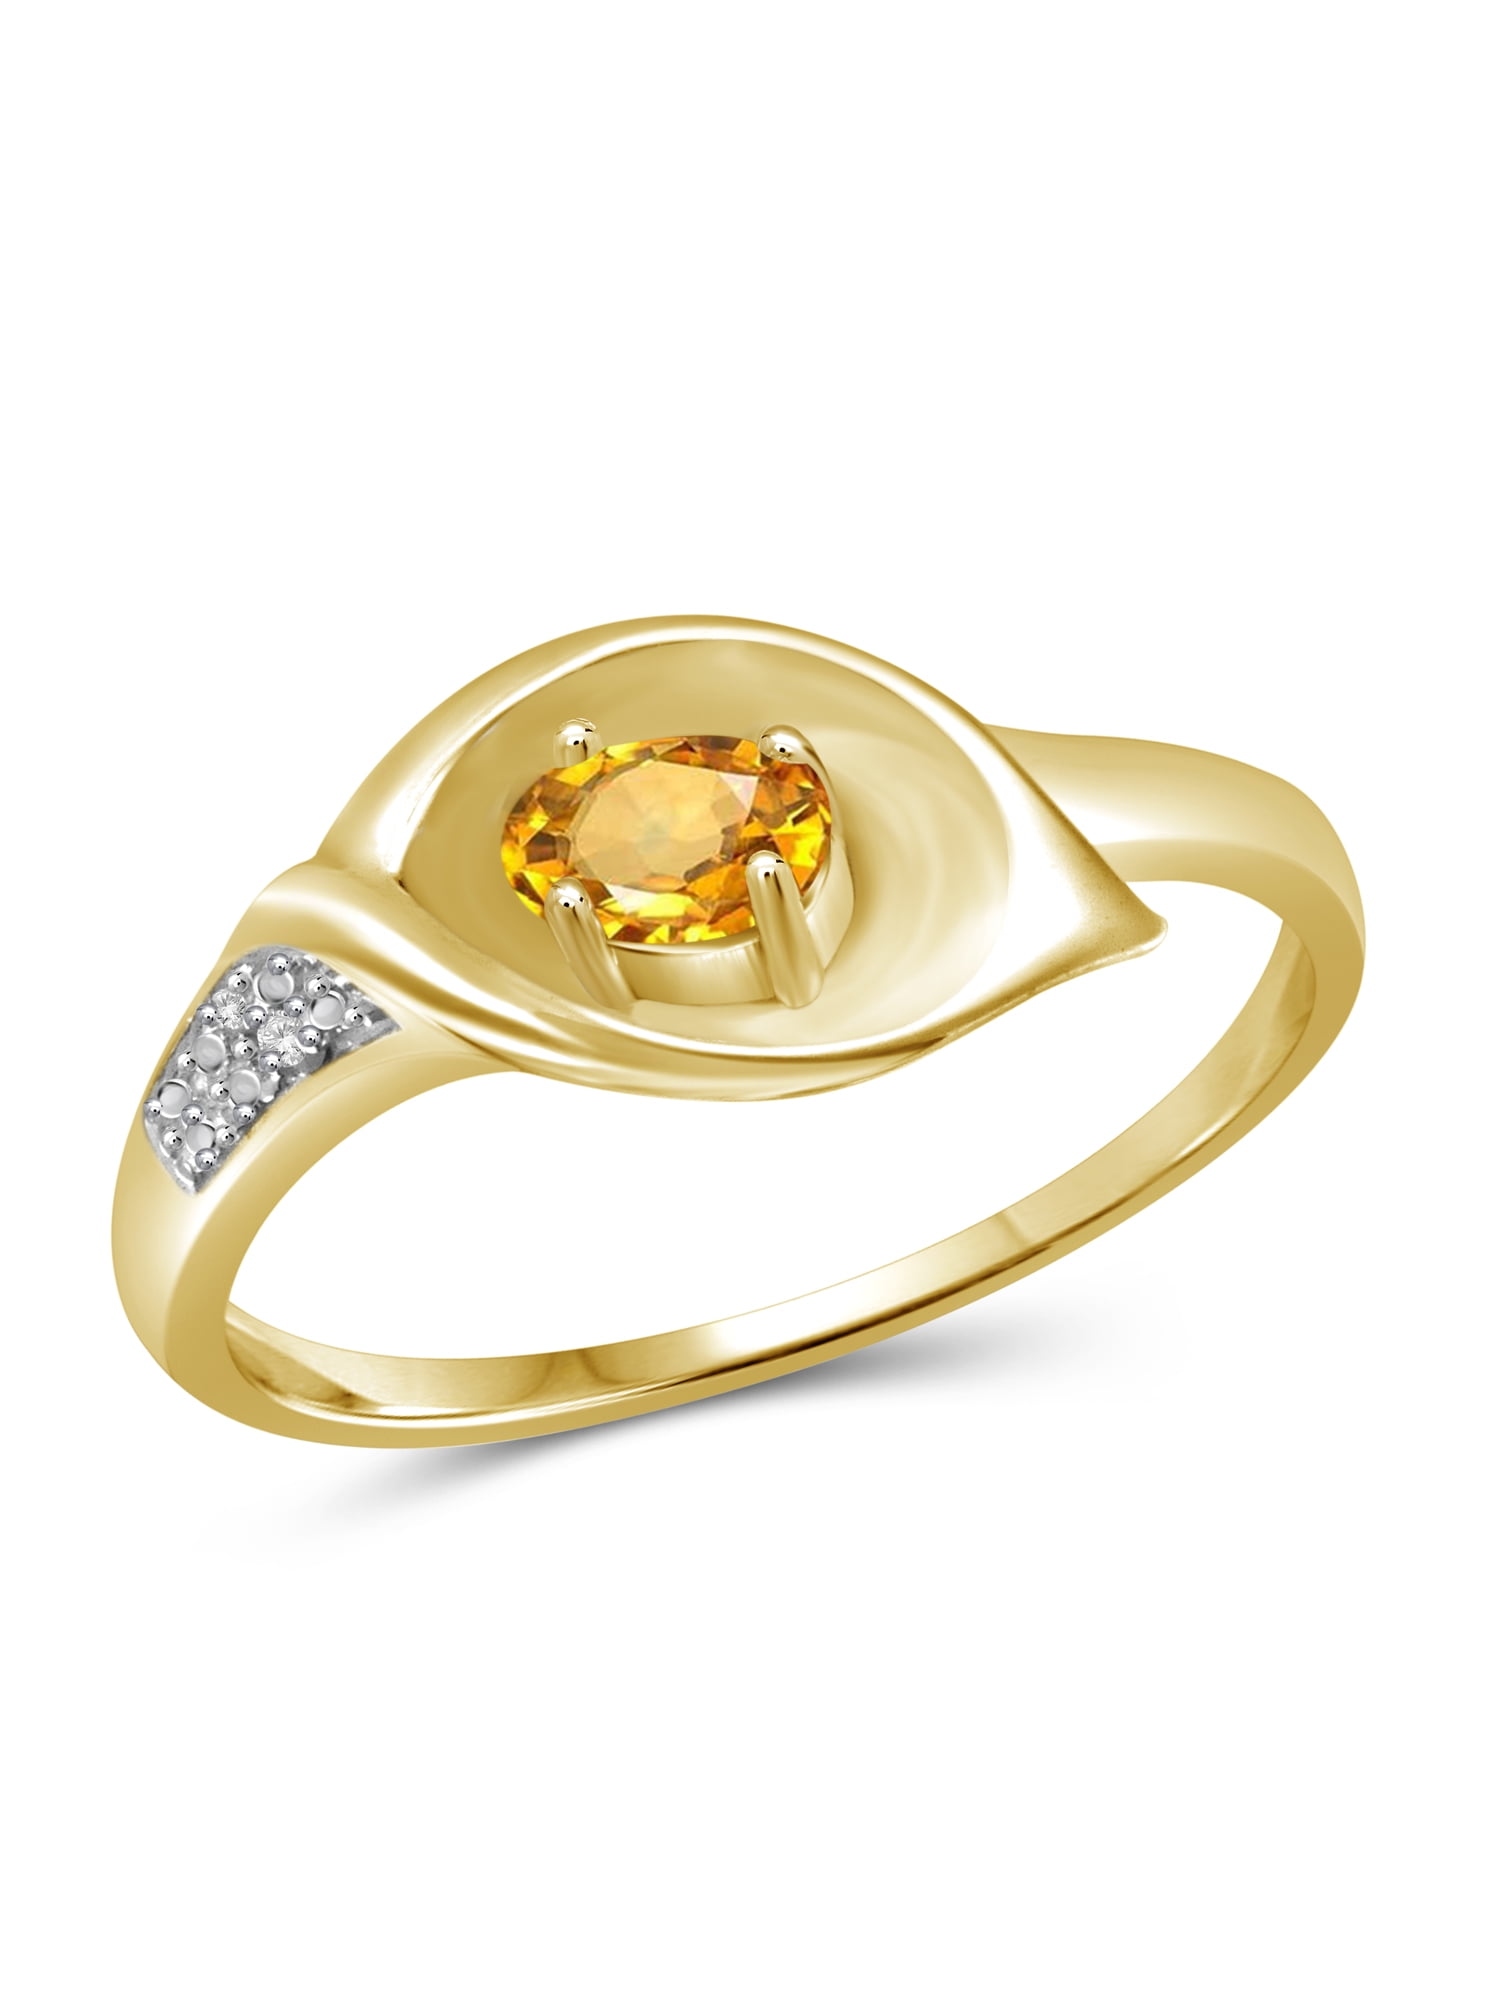 Primal Gold 14 Karat Yellow Gold 7x5mm Oval Citrine Ring - Walmart.com